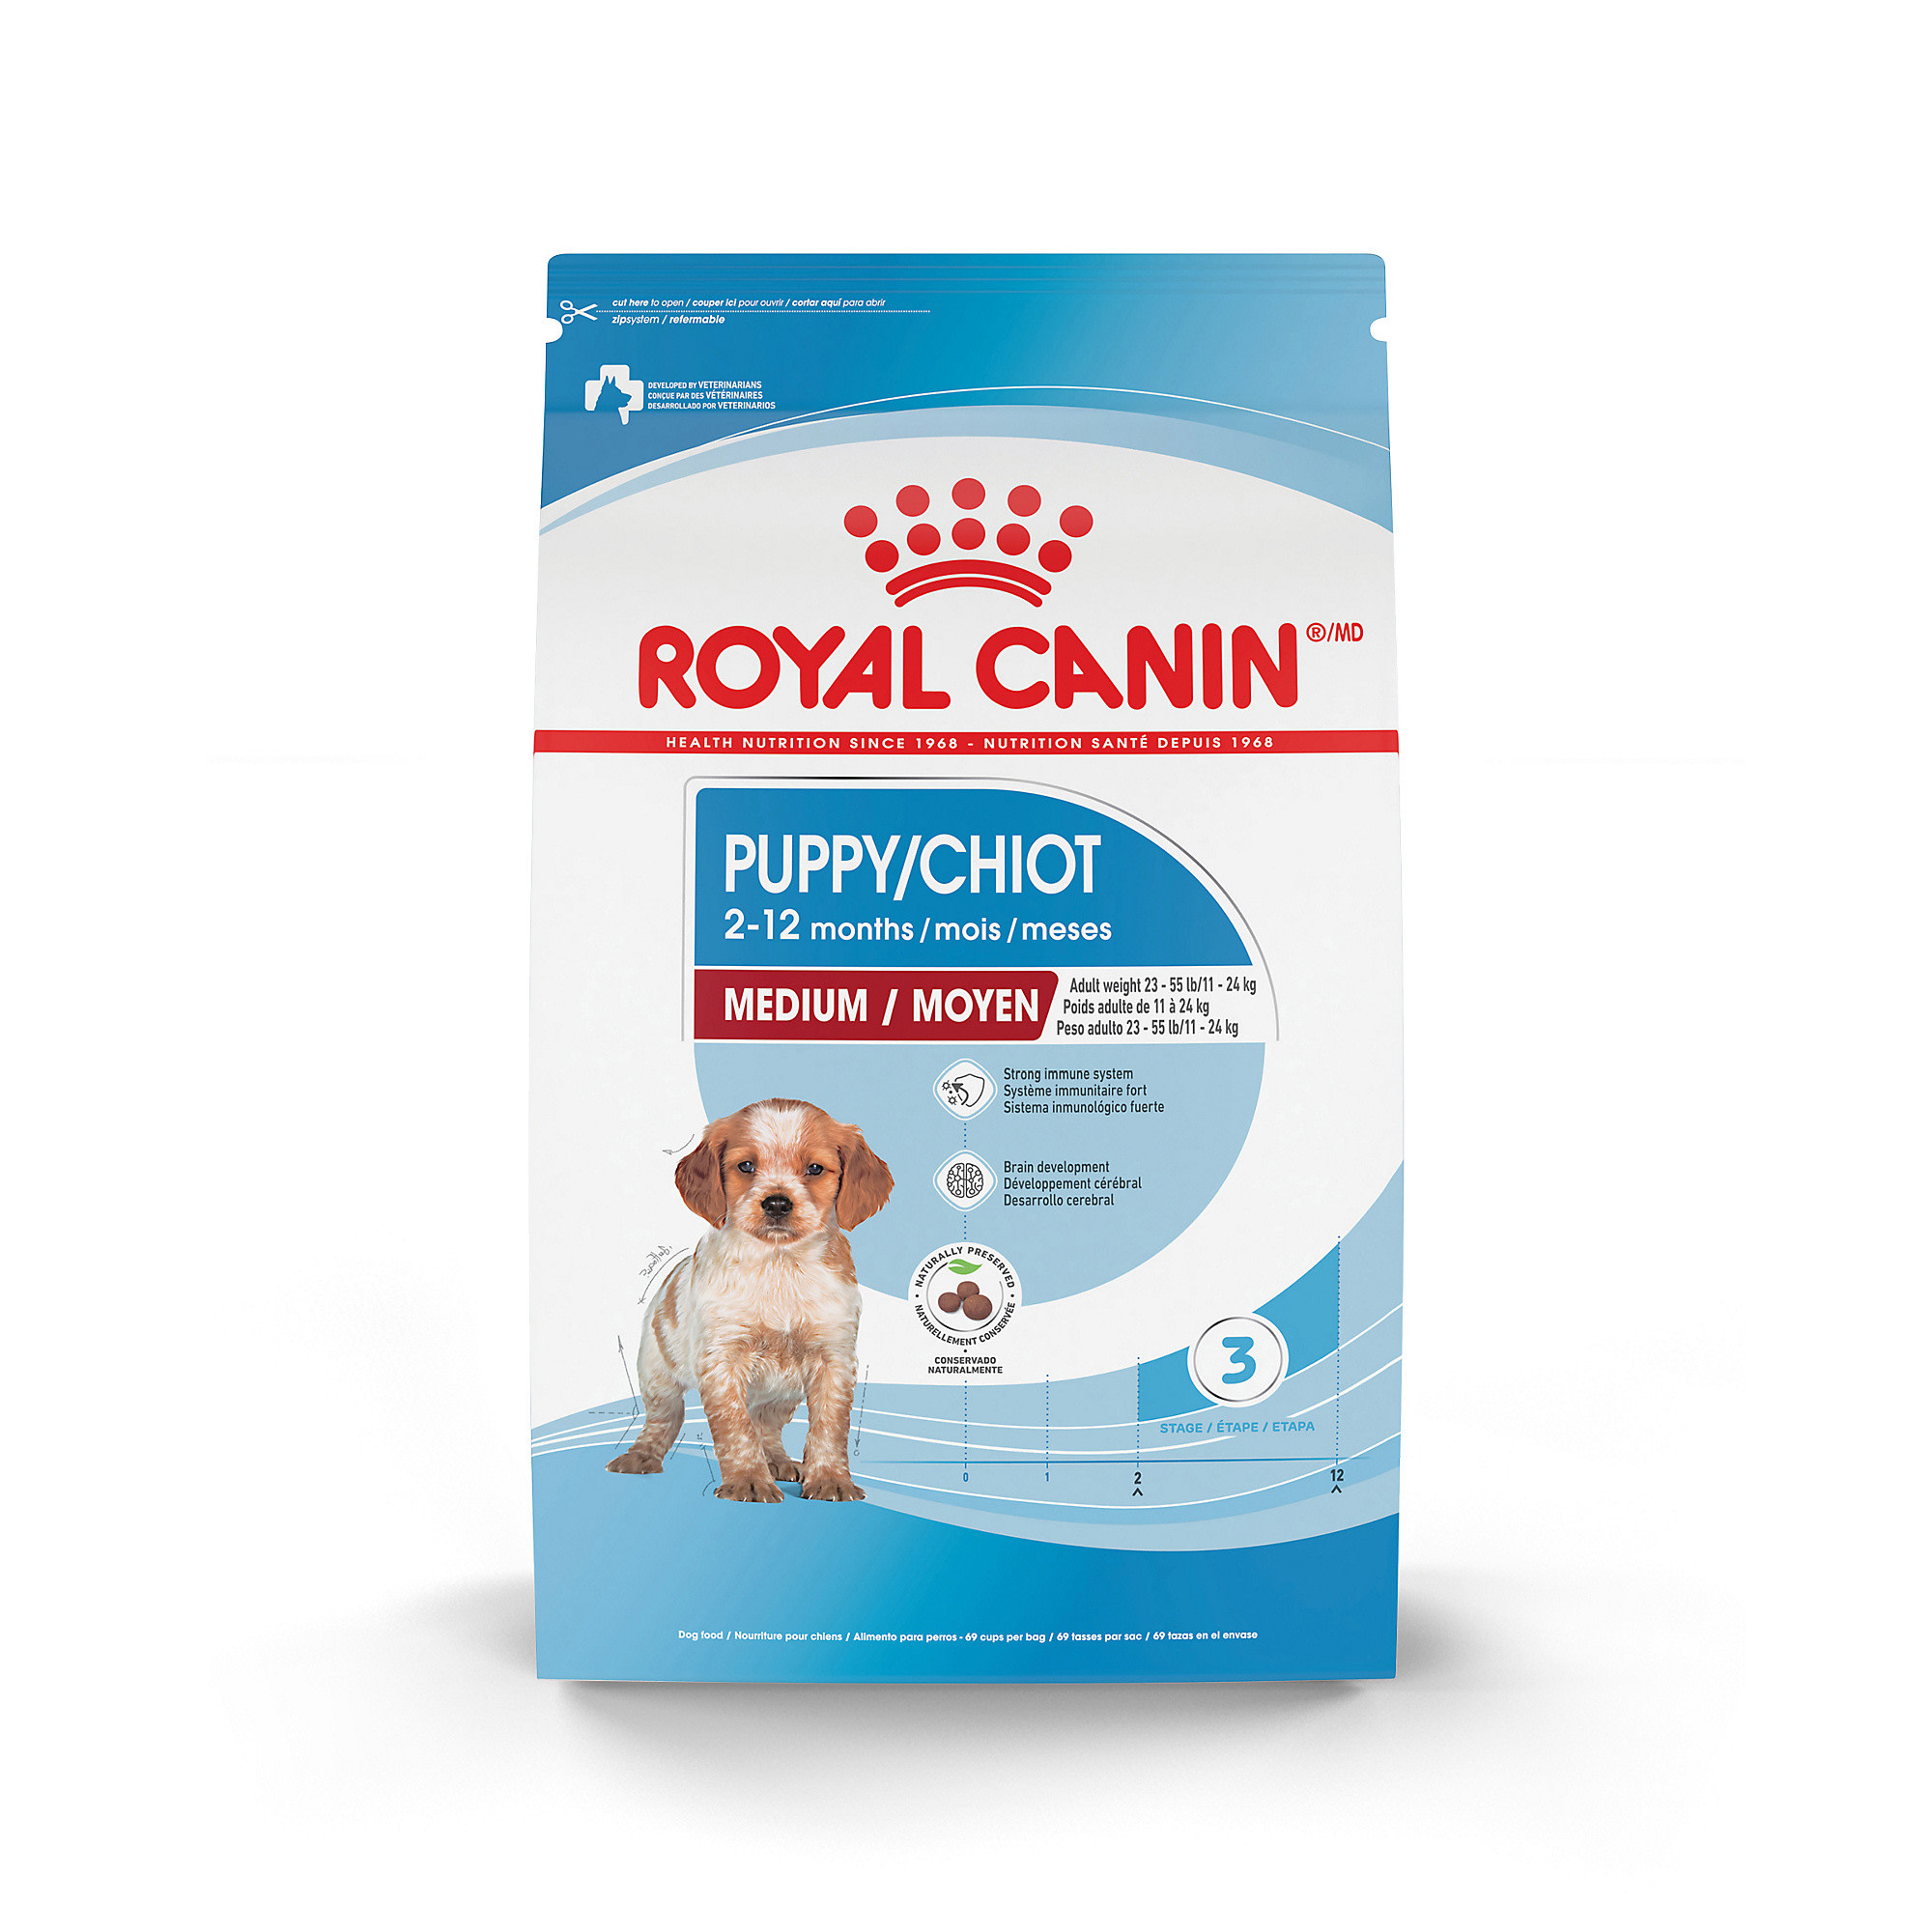 Crocchette per cani Royal canin medium puppy 15 kg